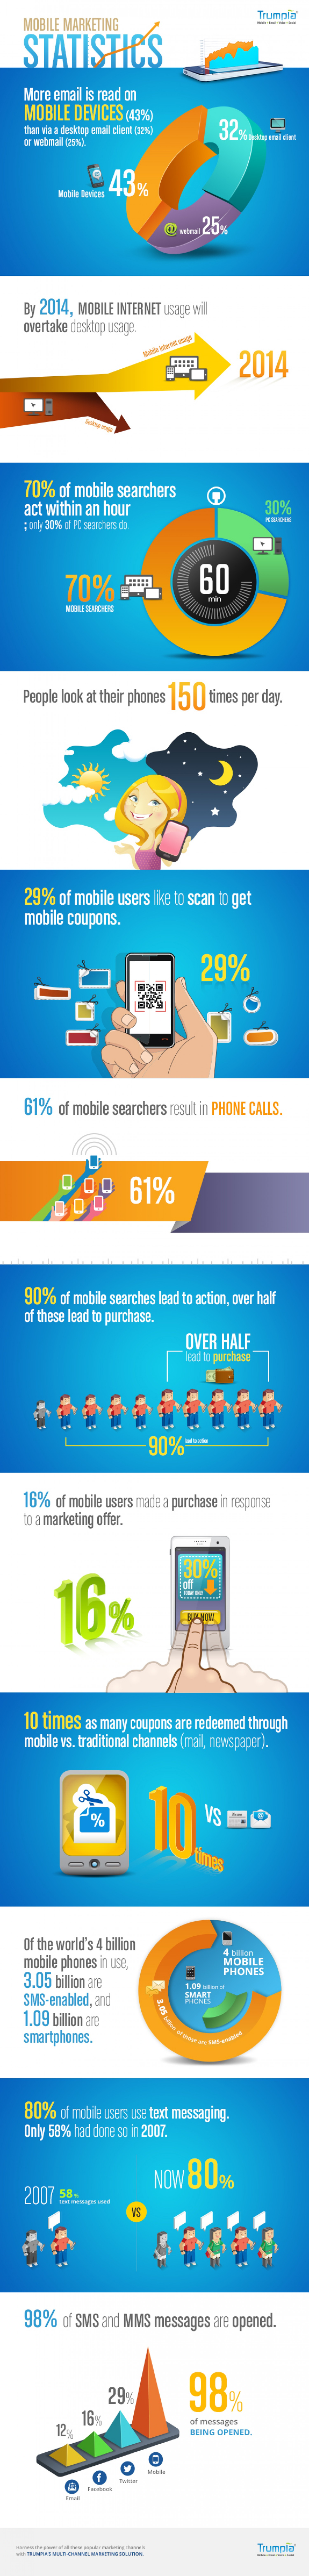 3. Mobile Marketing Statistics